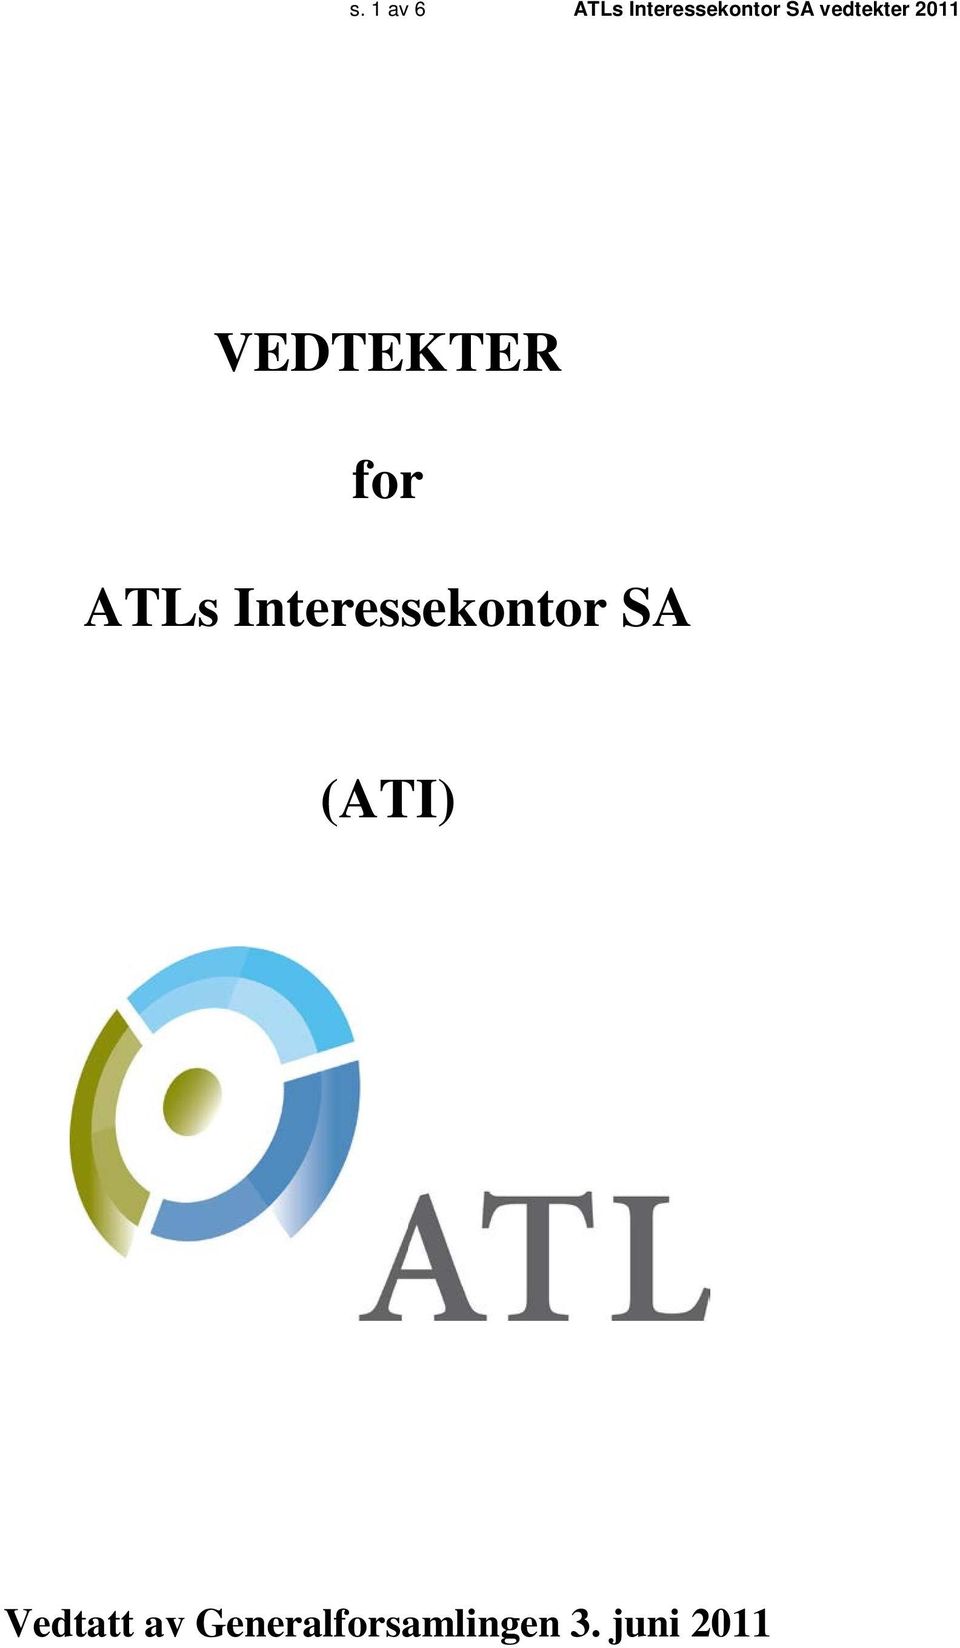 Interessekontor SA (ATI) Vedtatt